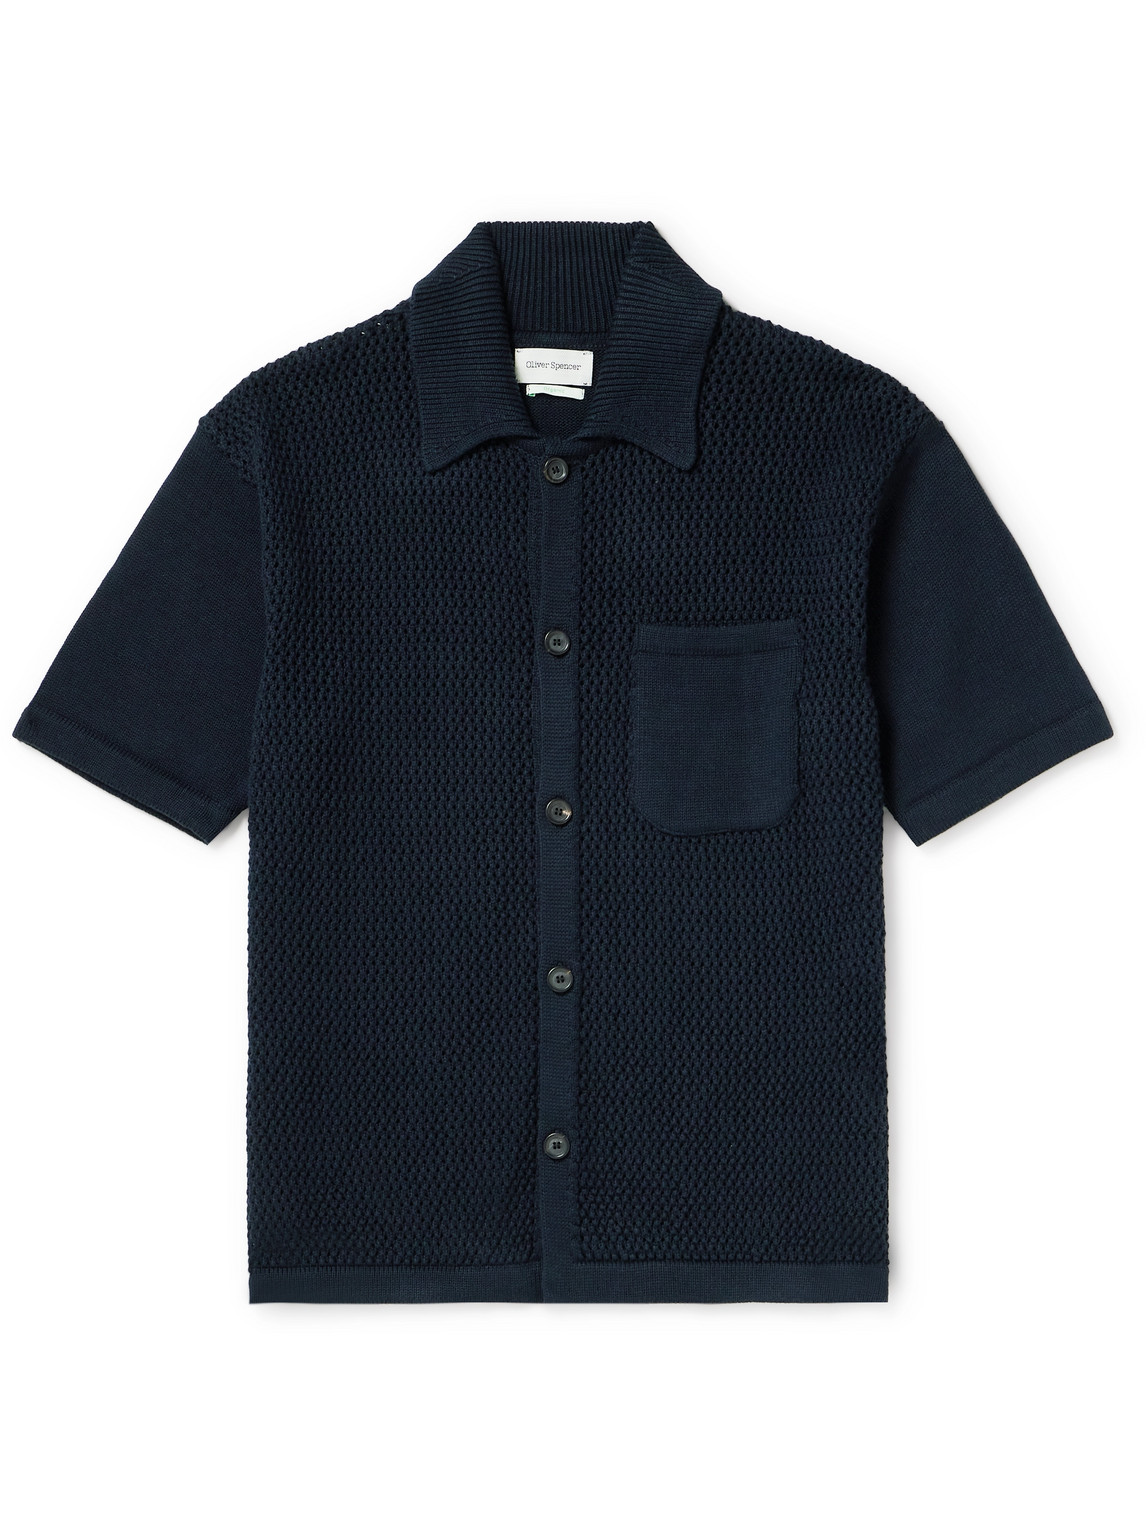 Mawes Open-Knit Organic Cotton Shirt